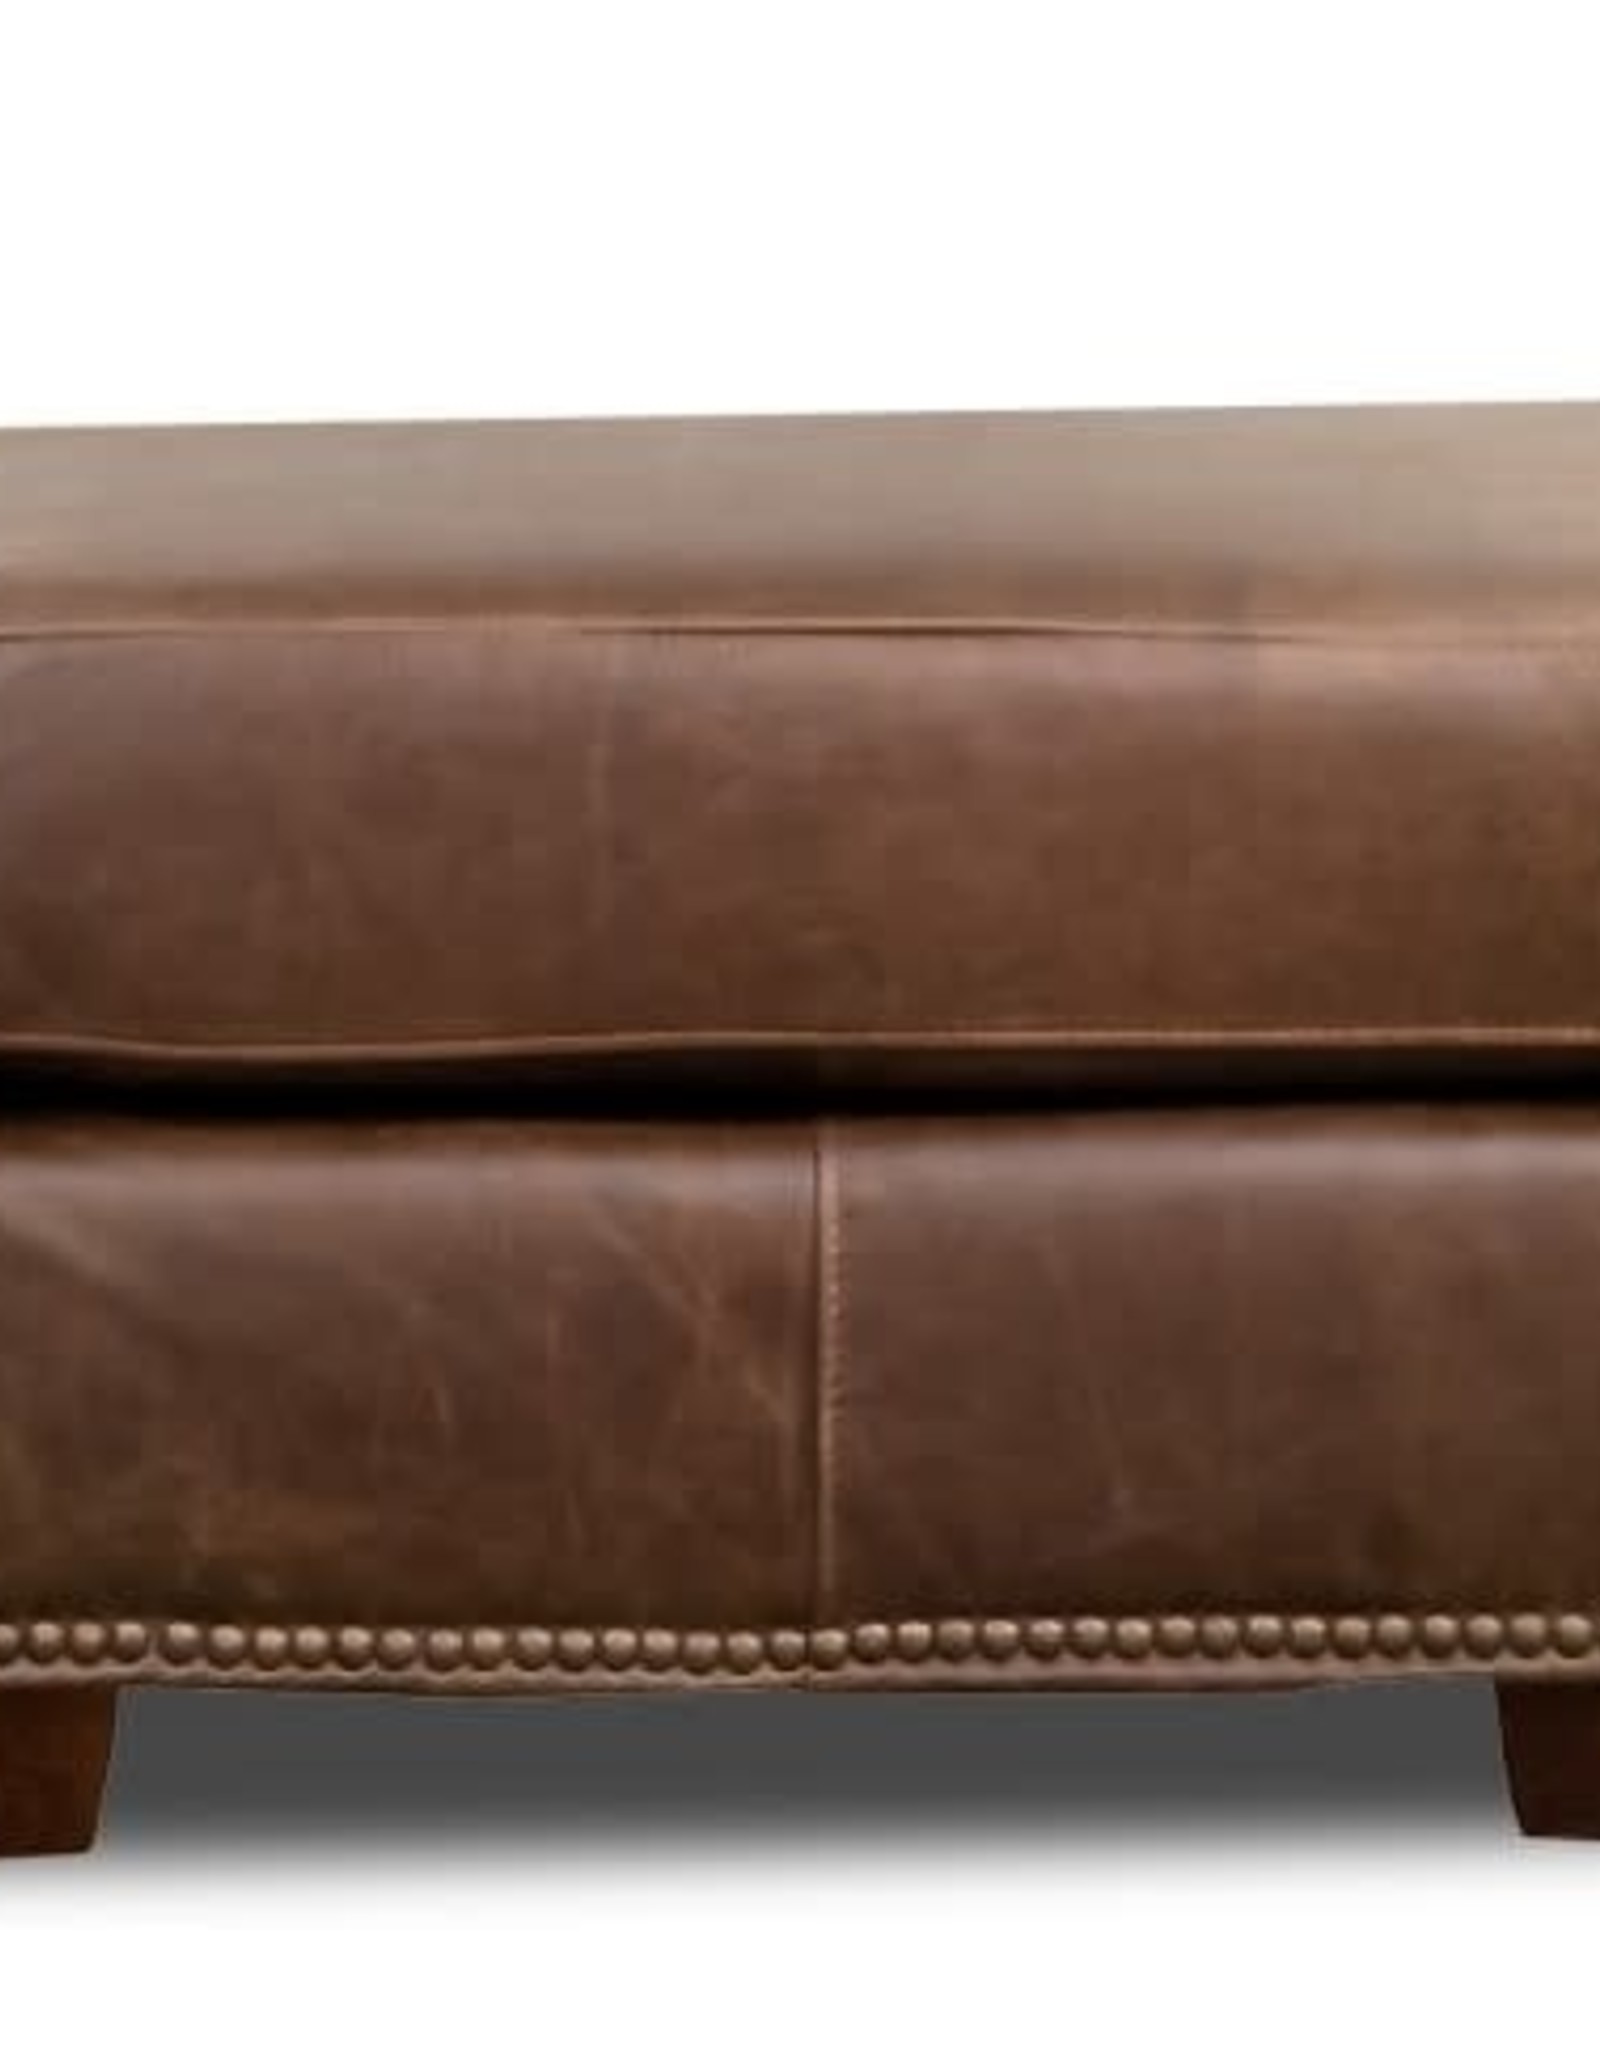 USA Premium Leather Ancient Brown Leather Ottoman 26" w x 30" deep x 16" tall